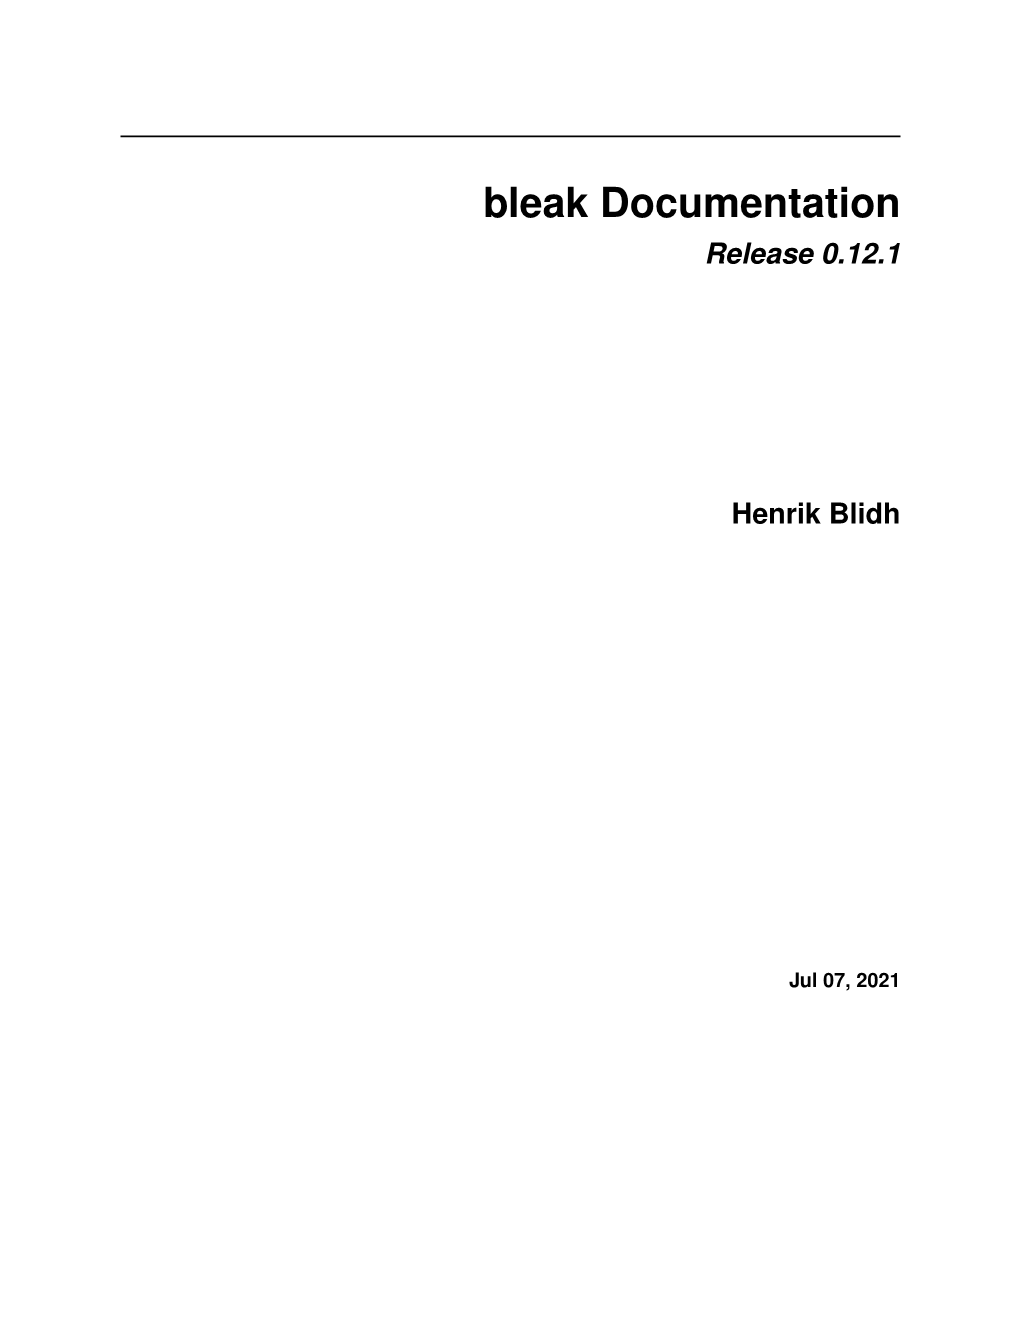 Bleak Documentation Release 0.12.1